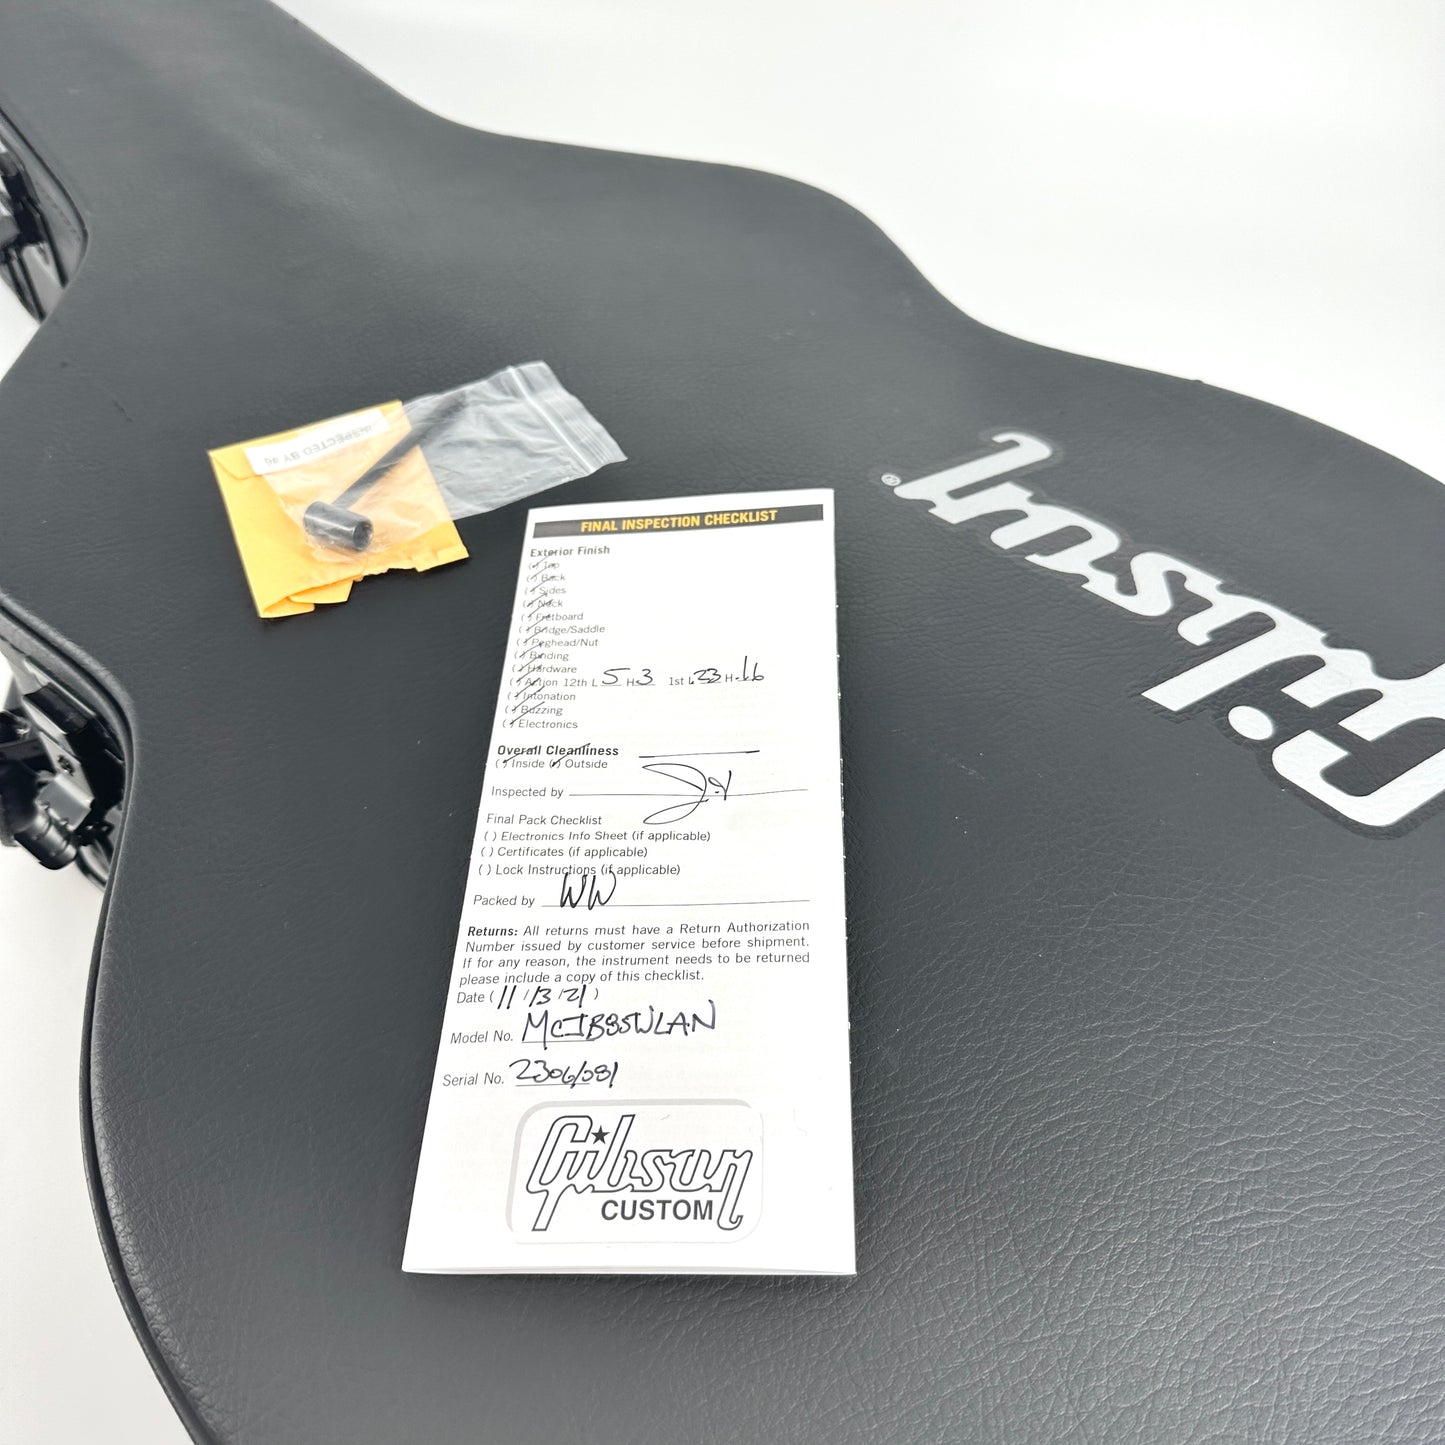 2021 Gibson J-185 EC Modern Walnut Electro Acoustic - Antique Natural